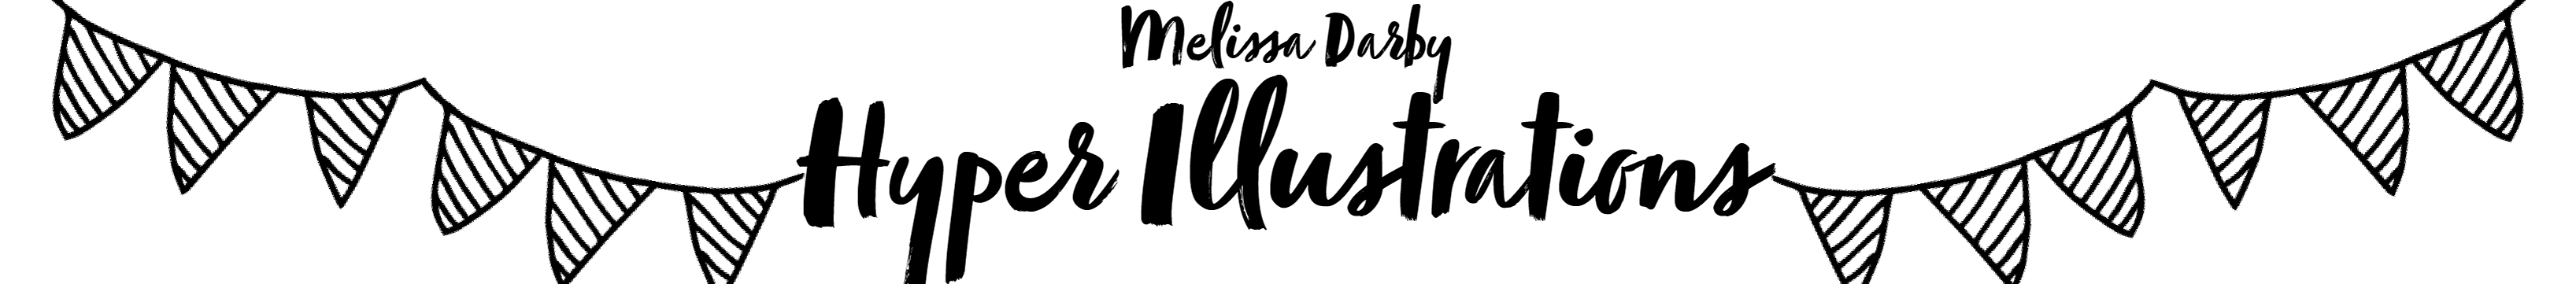 Melissa Darbys profilbanner